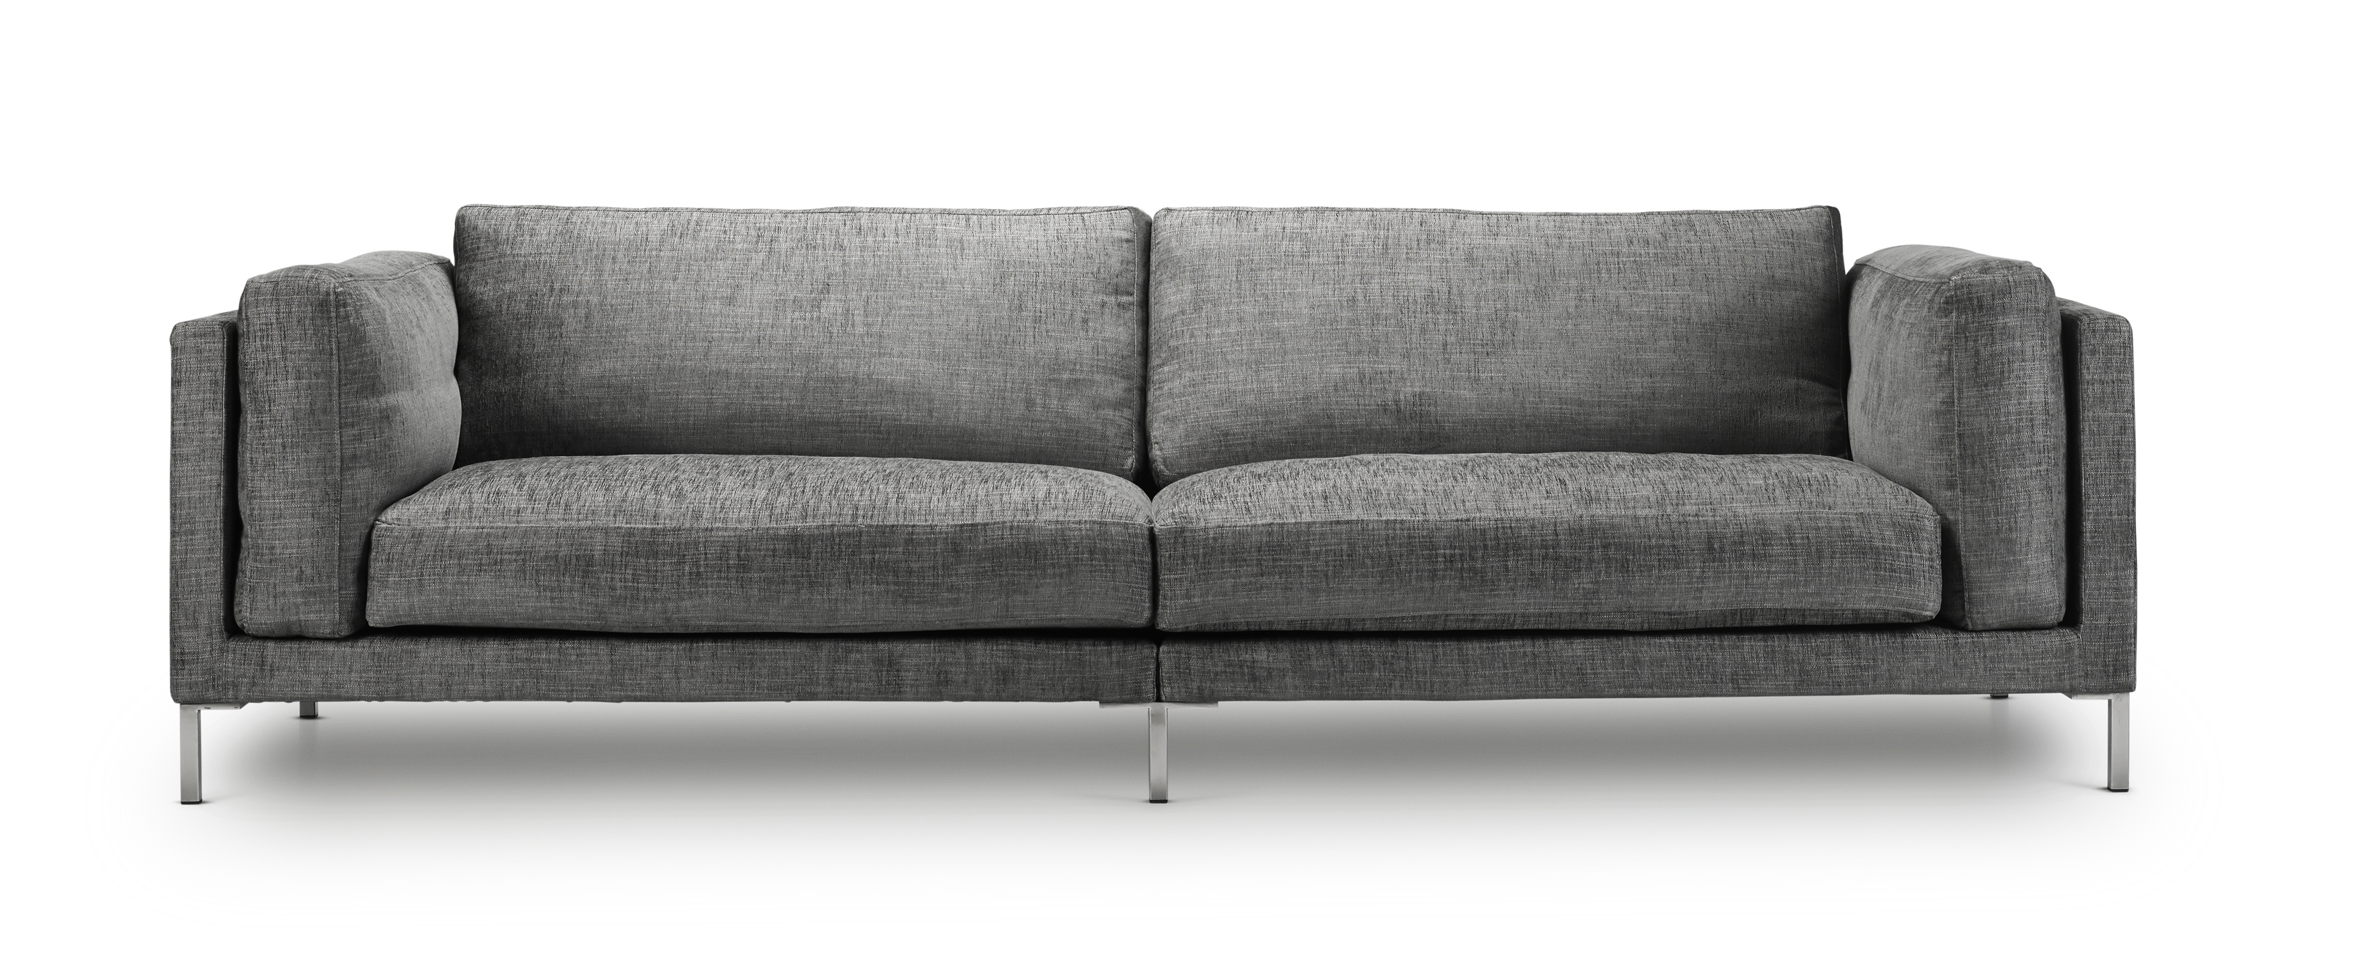 JUUL301 sofa, design Eilersen